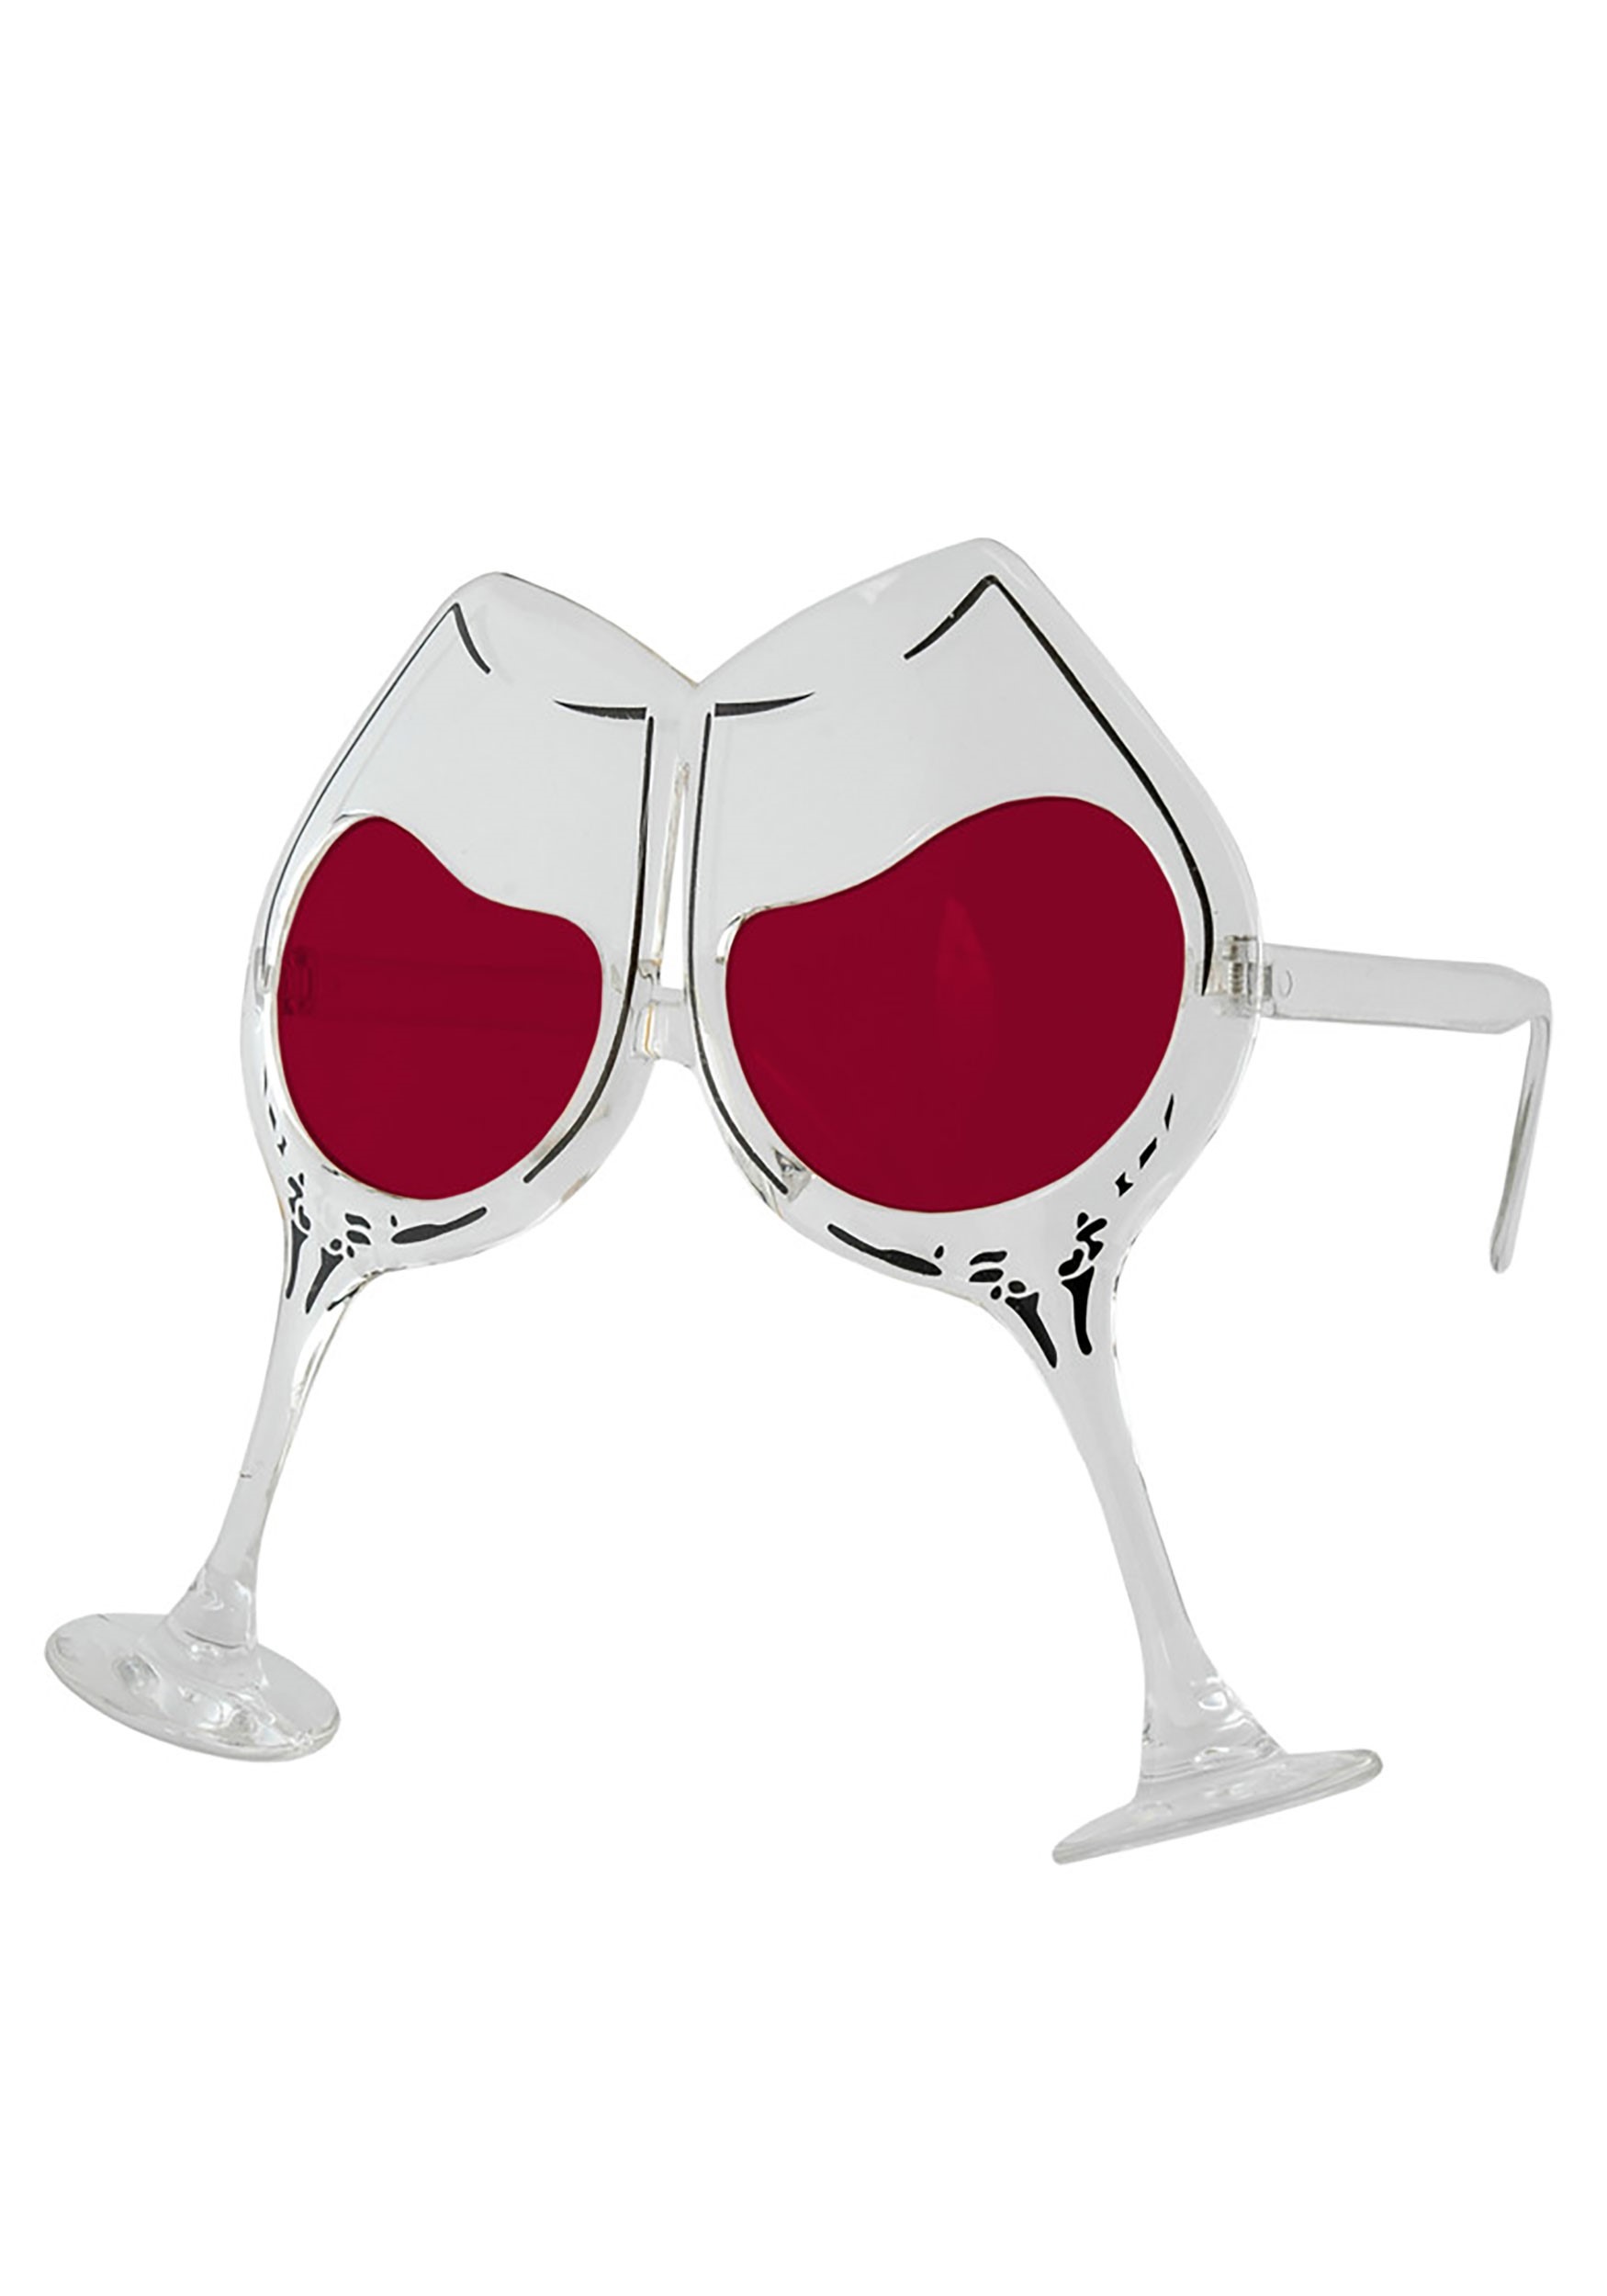 https://images.fun.com/products/69180/2-1-159332/clear-rose-wine-goblet-costume-eyeglasses-alt-2.jpg